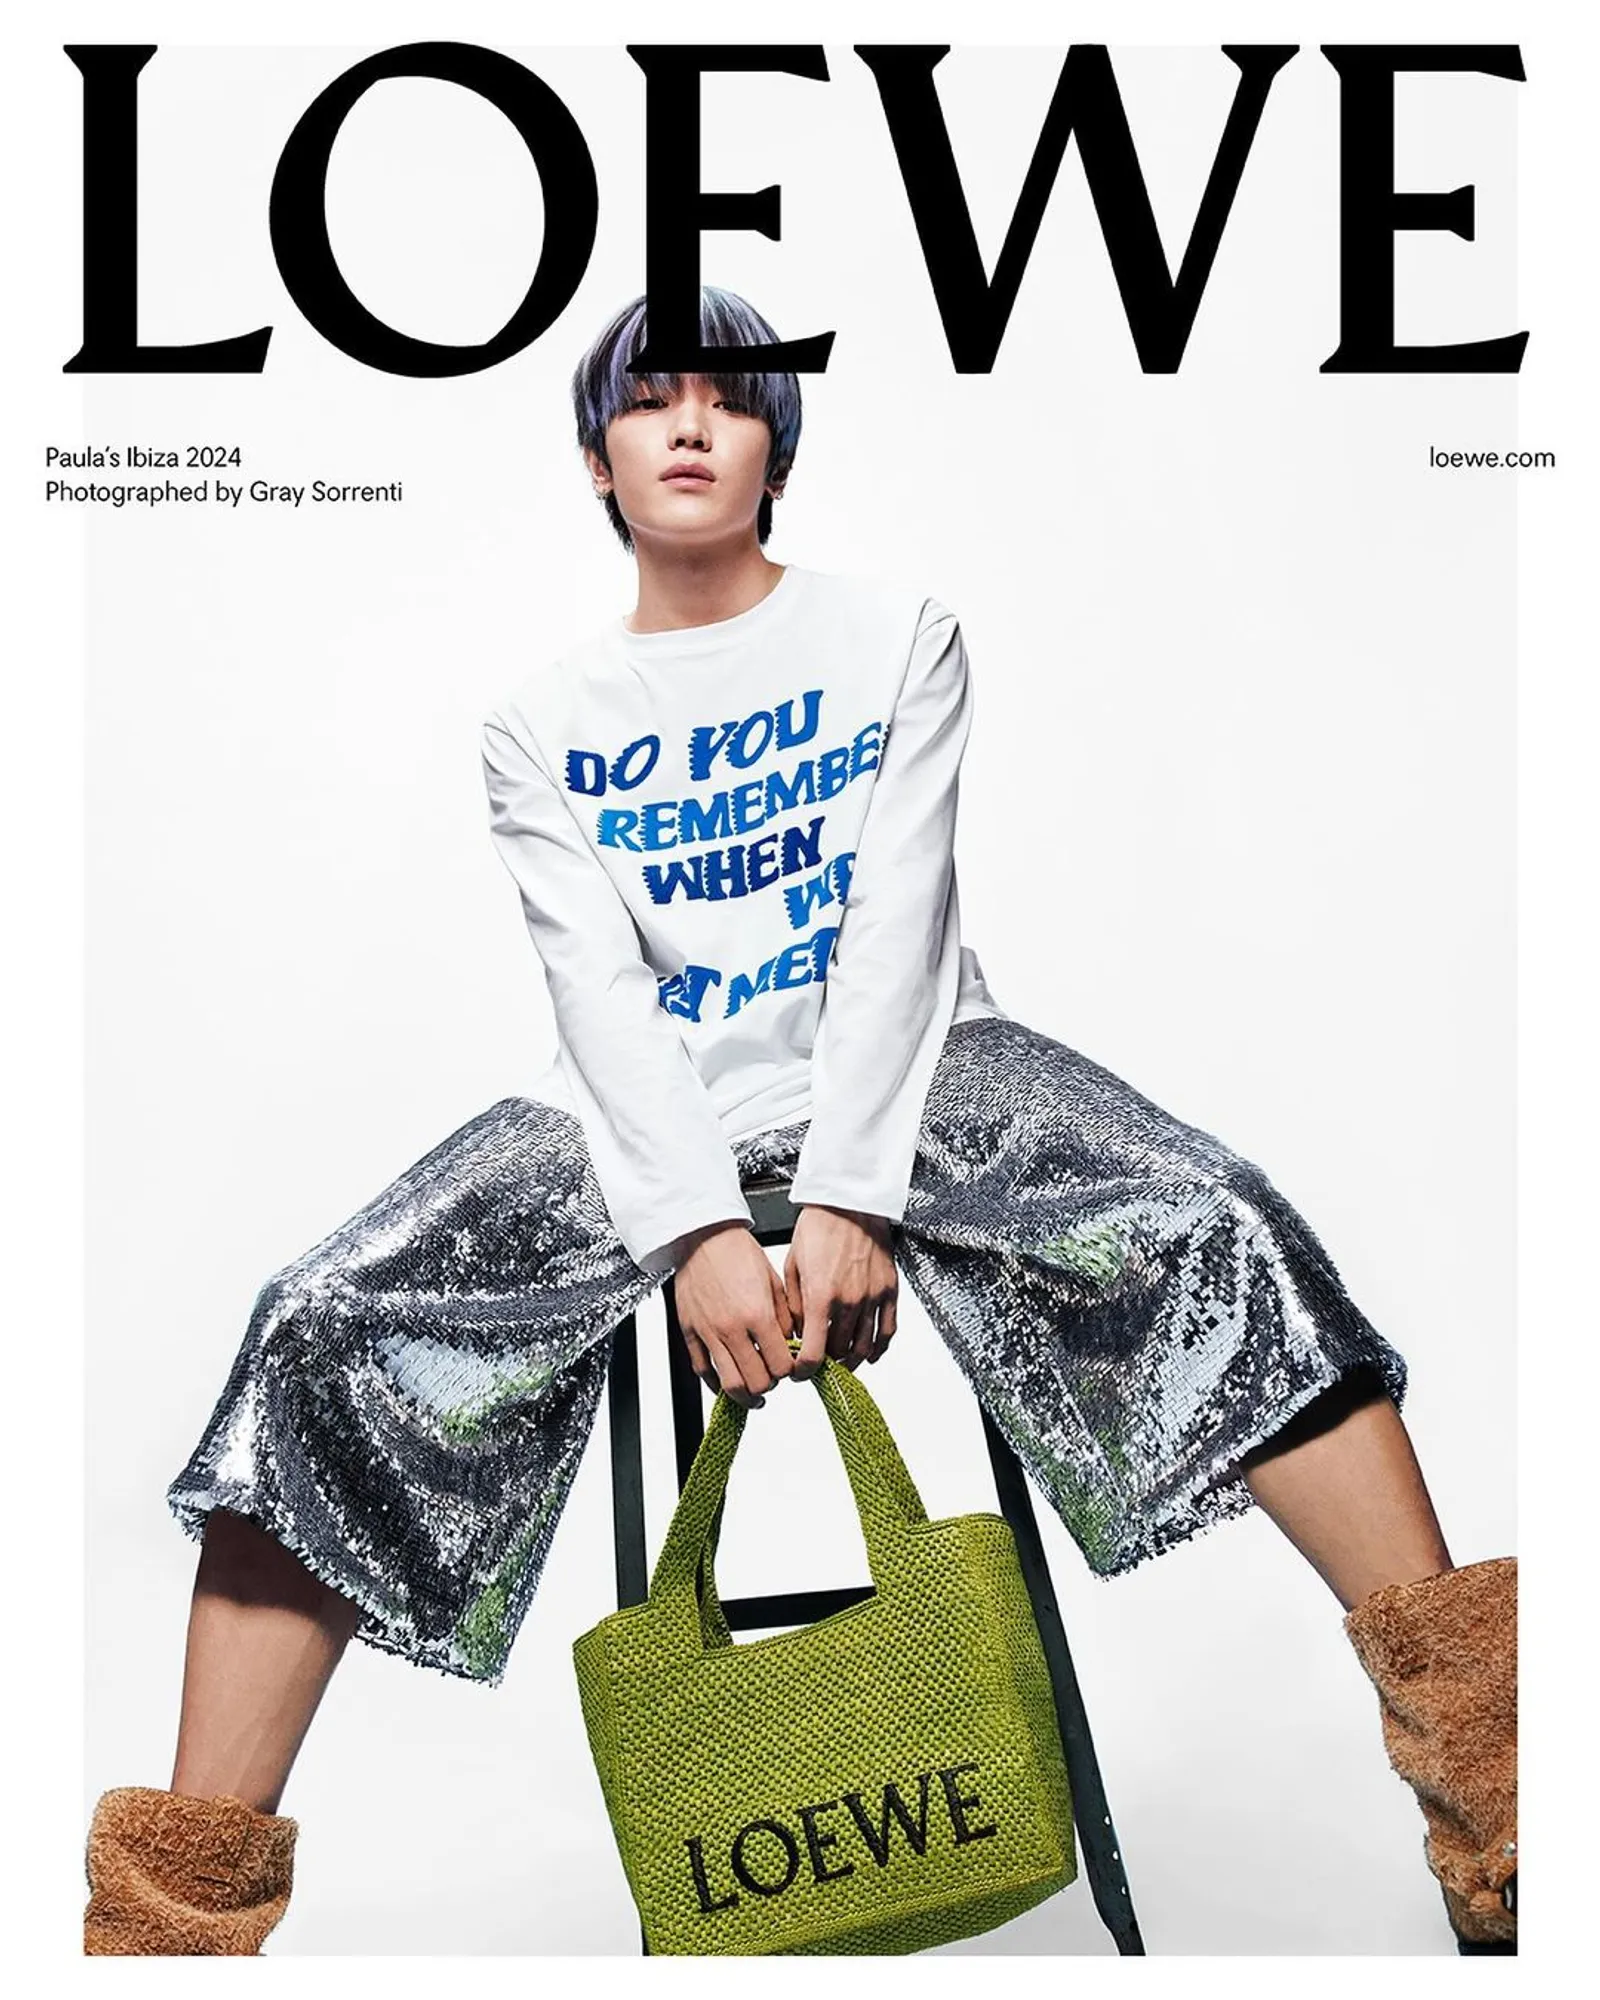 Taeyong 'NCT' Jadi Bintang Campaign Loewe Paula Ibiza 2024